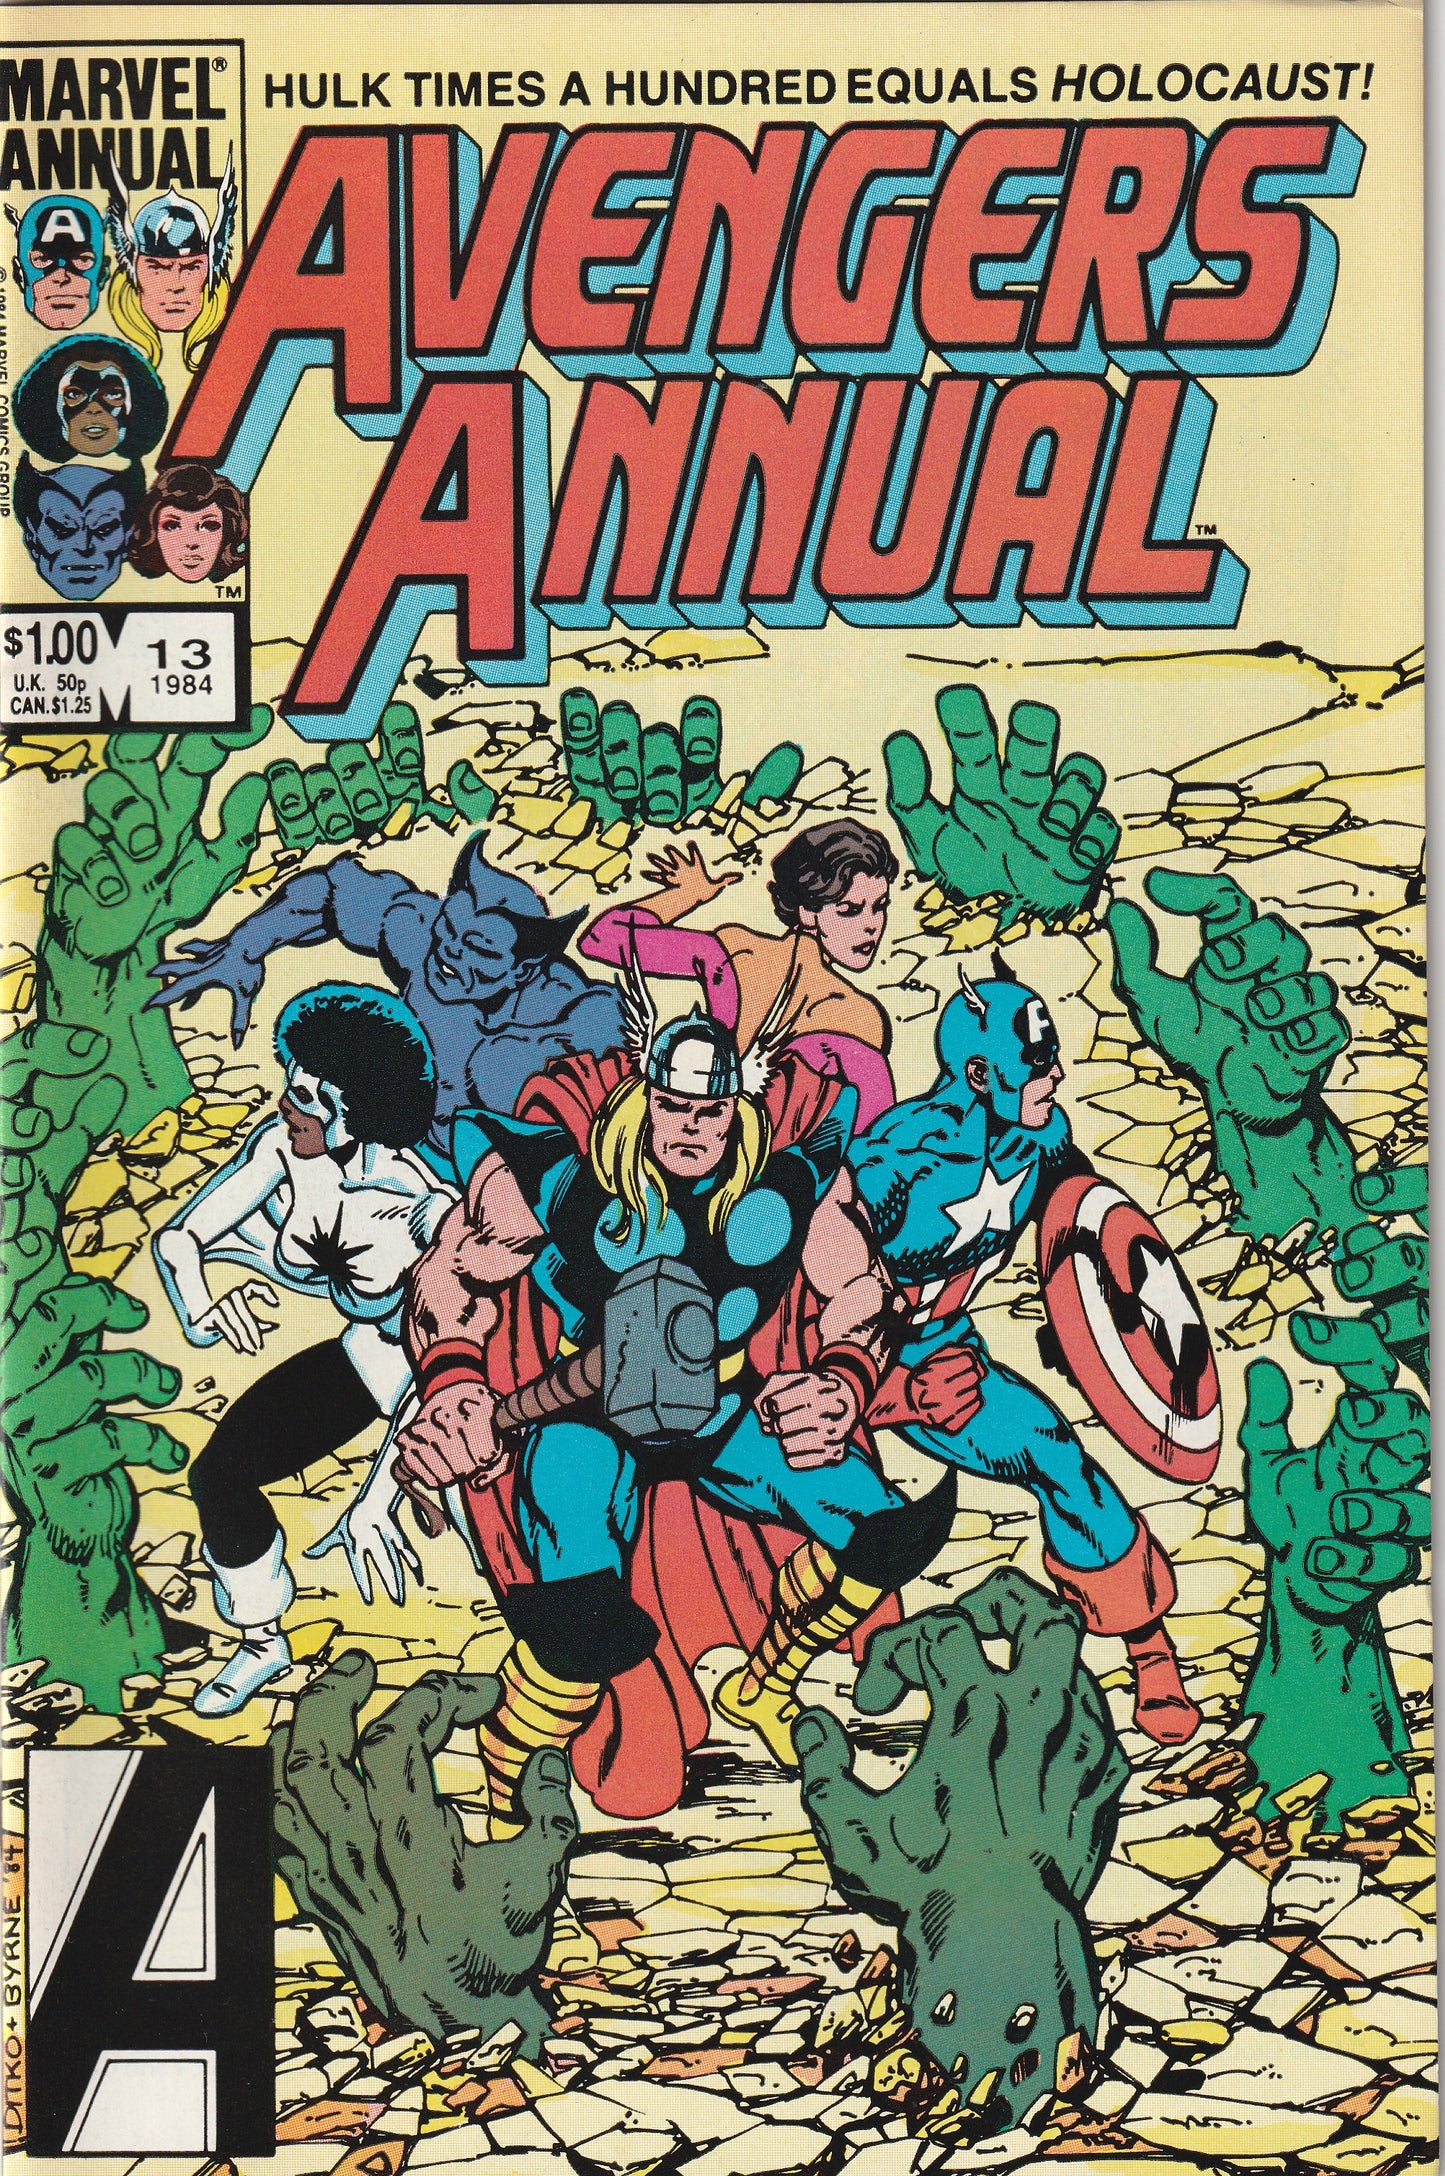 Avengers Annual #13 (1984) - SHE-HULK (Jennifer Walters) Origin Revealed